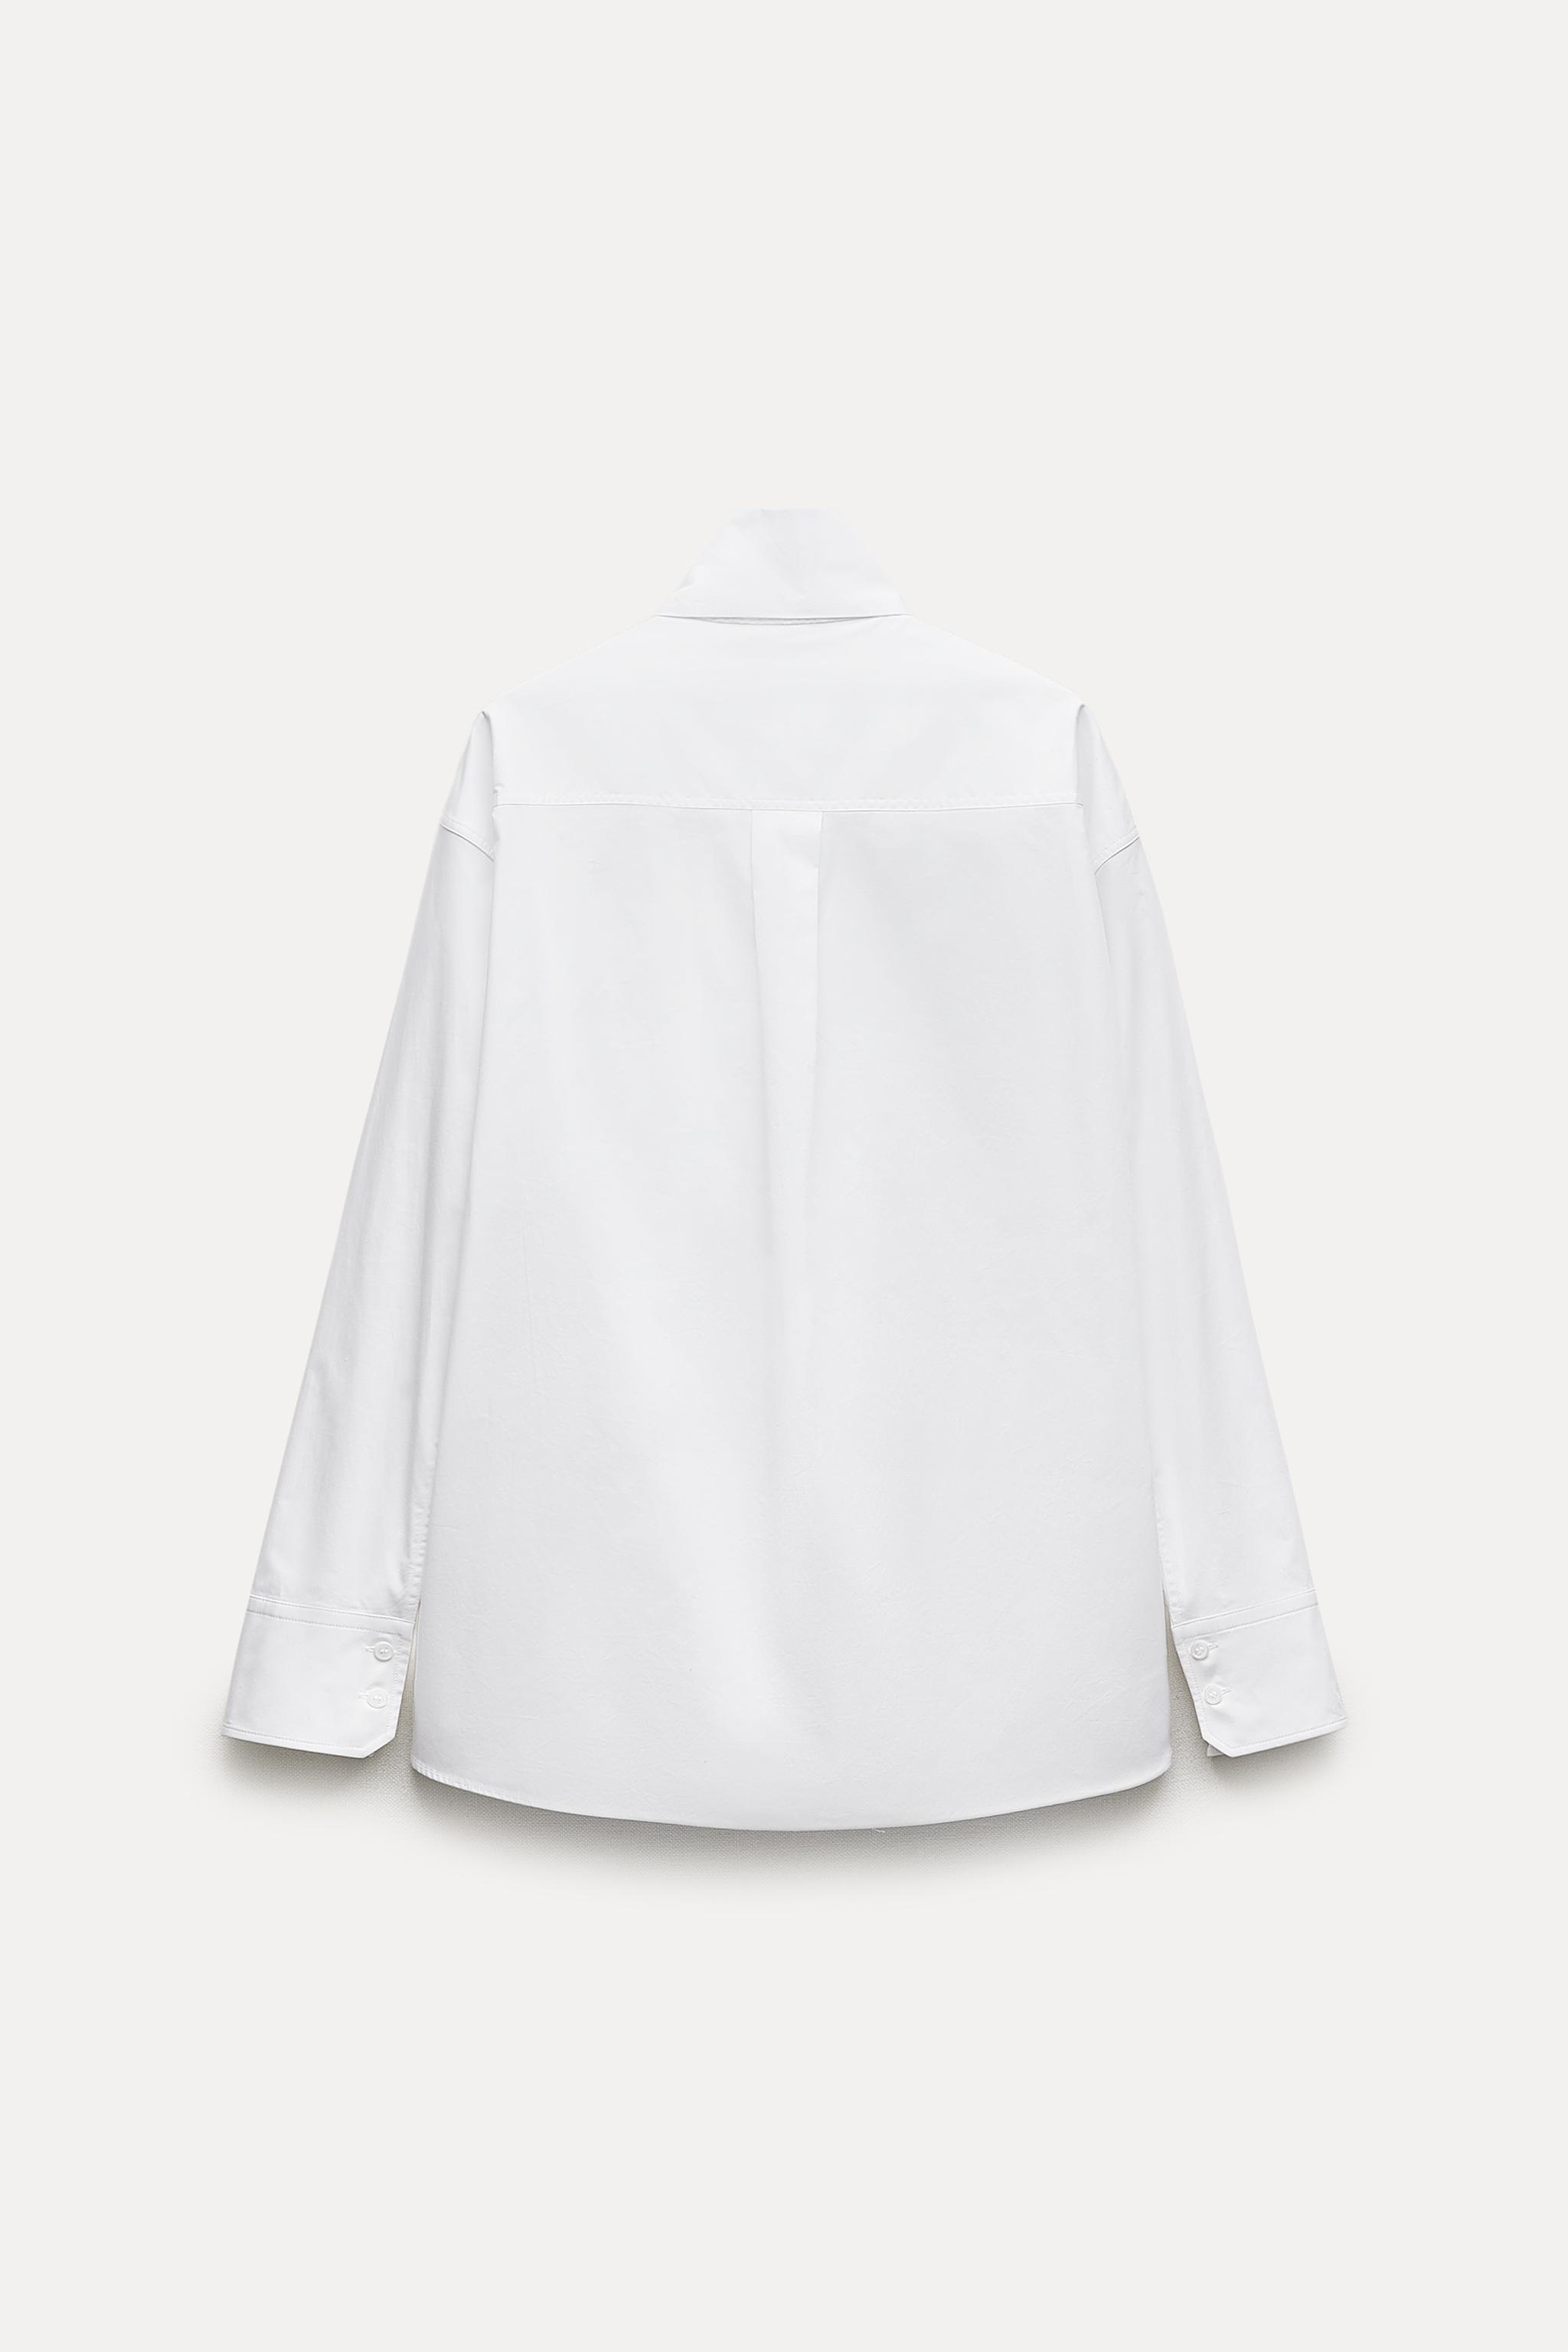 ZW COLLECTION ポプリンシャツ タイ - ホワイト | ZARA Japan / 日本